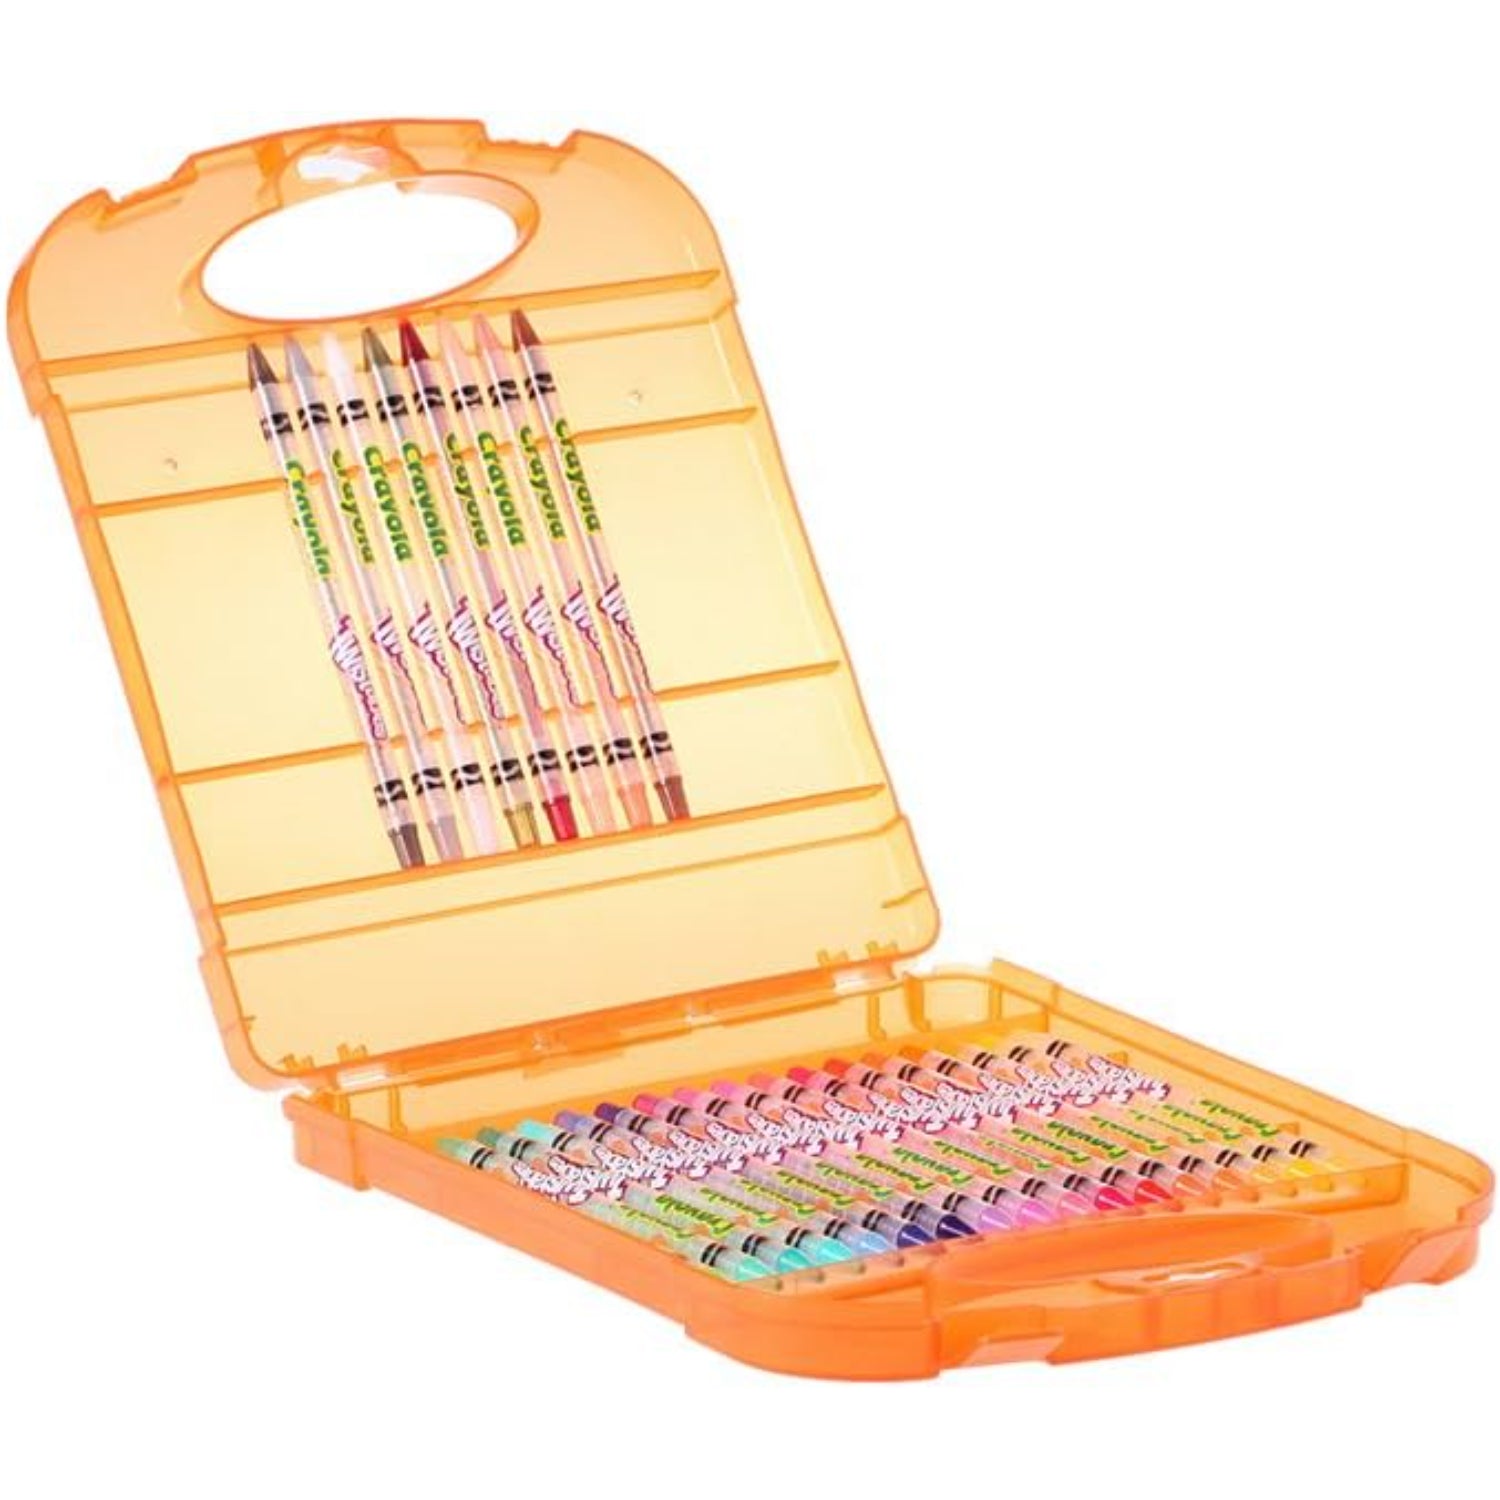 Crayola Twistables Colored Pencils Kit, 25 Twistables Colored Pencils and 40 sheets of paper